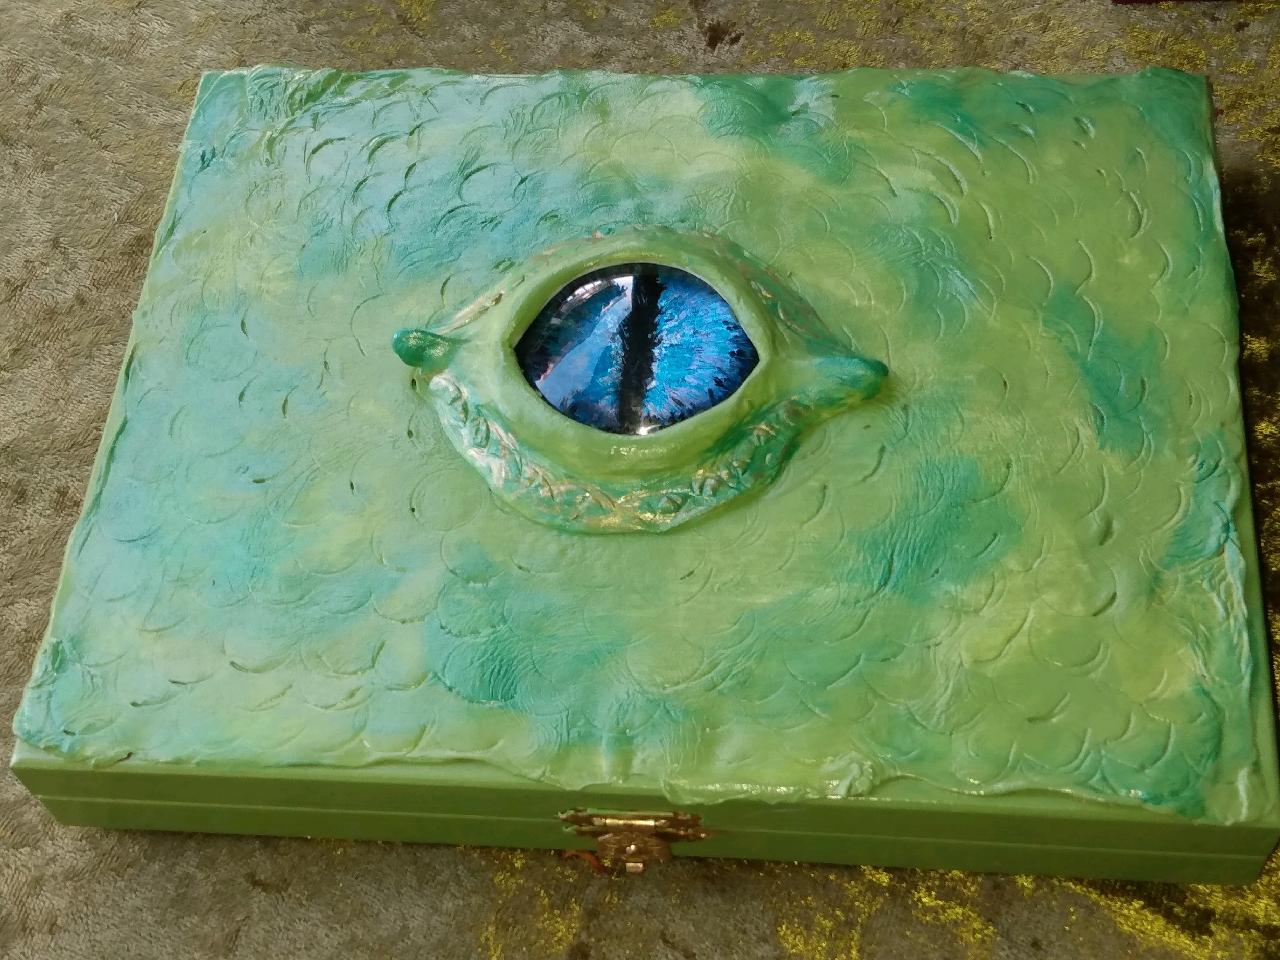 Green Dragon skin with blue eye